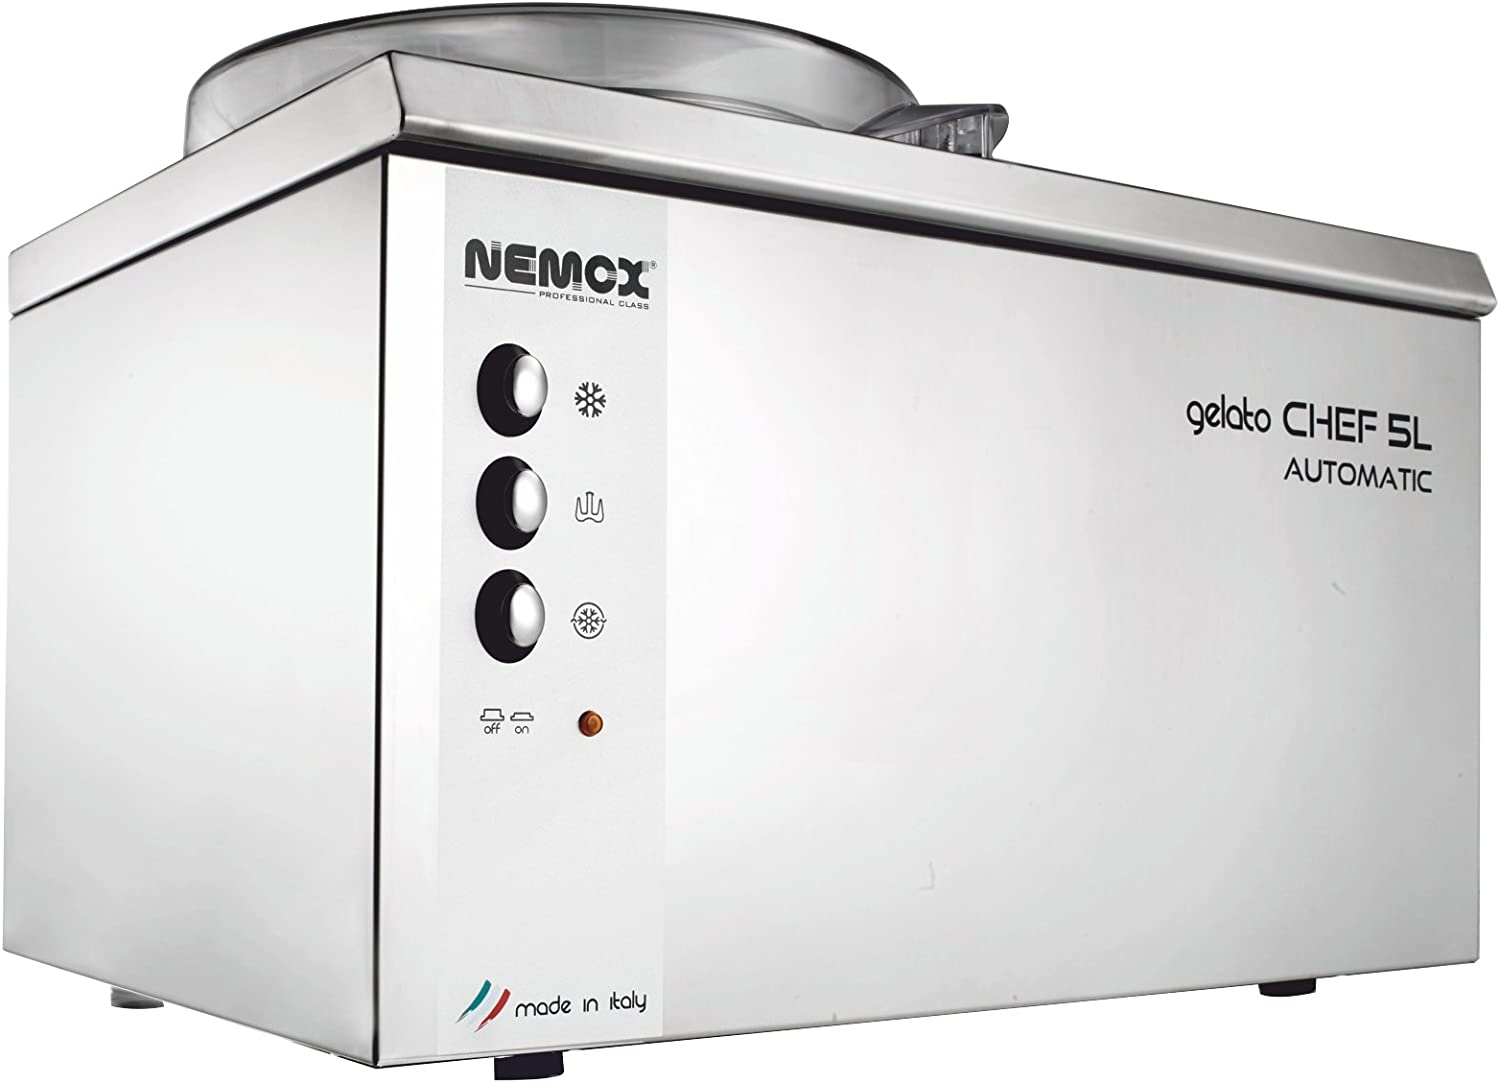 NEMOX 36790 Chef 5L Gelato-Ice Cream Machine, 2.5 Quart Bowl Capacity, Stainless Steel Brushed Finish Import To Shop ×Product